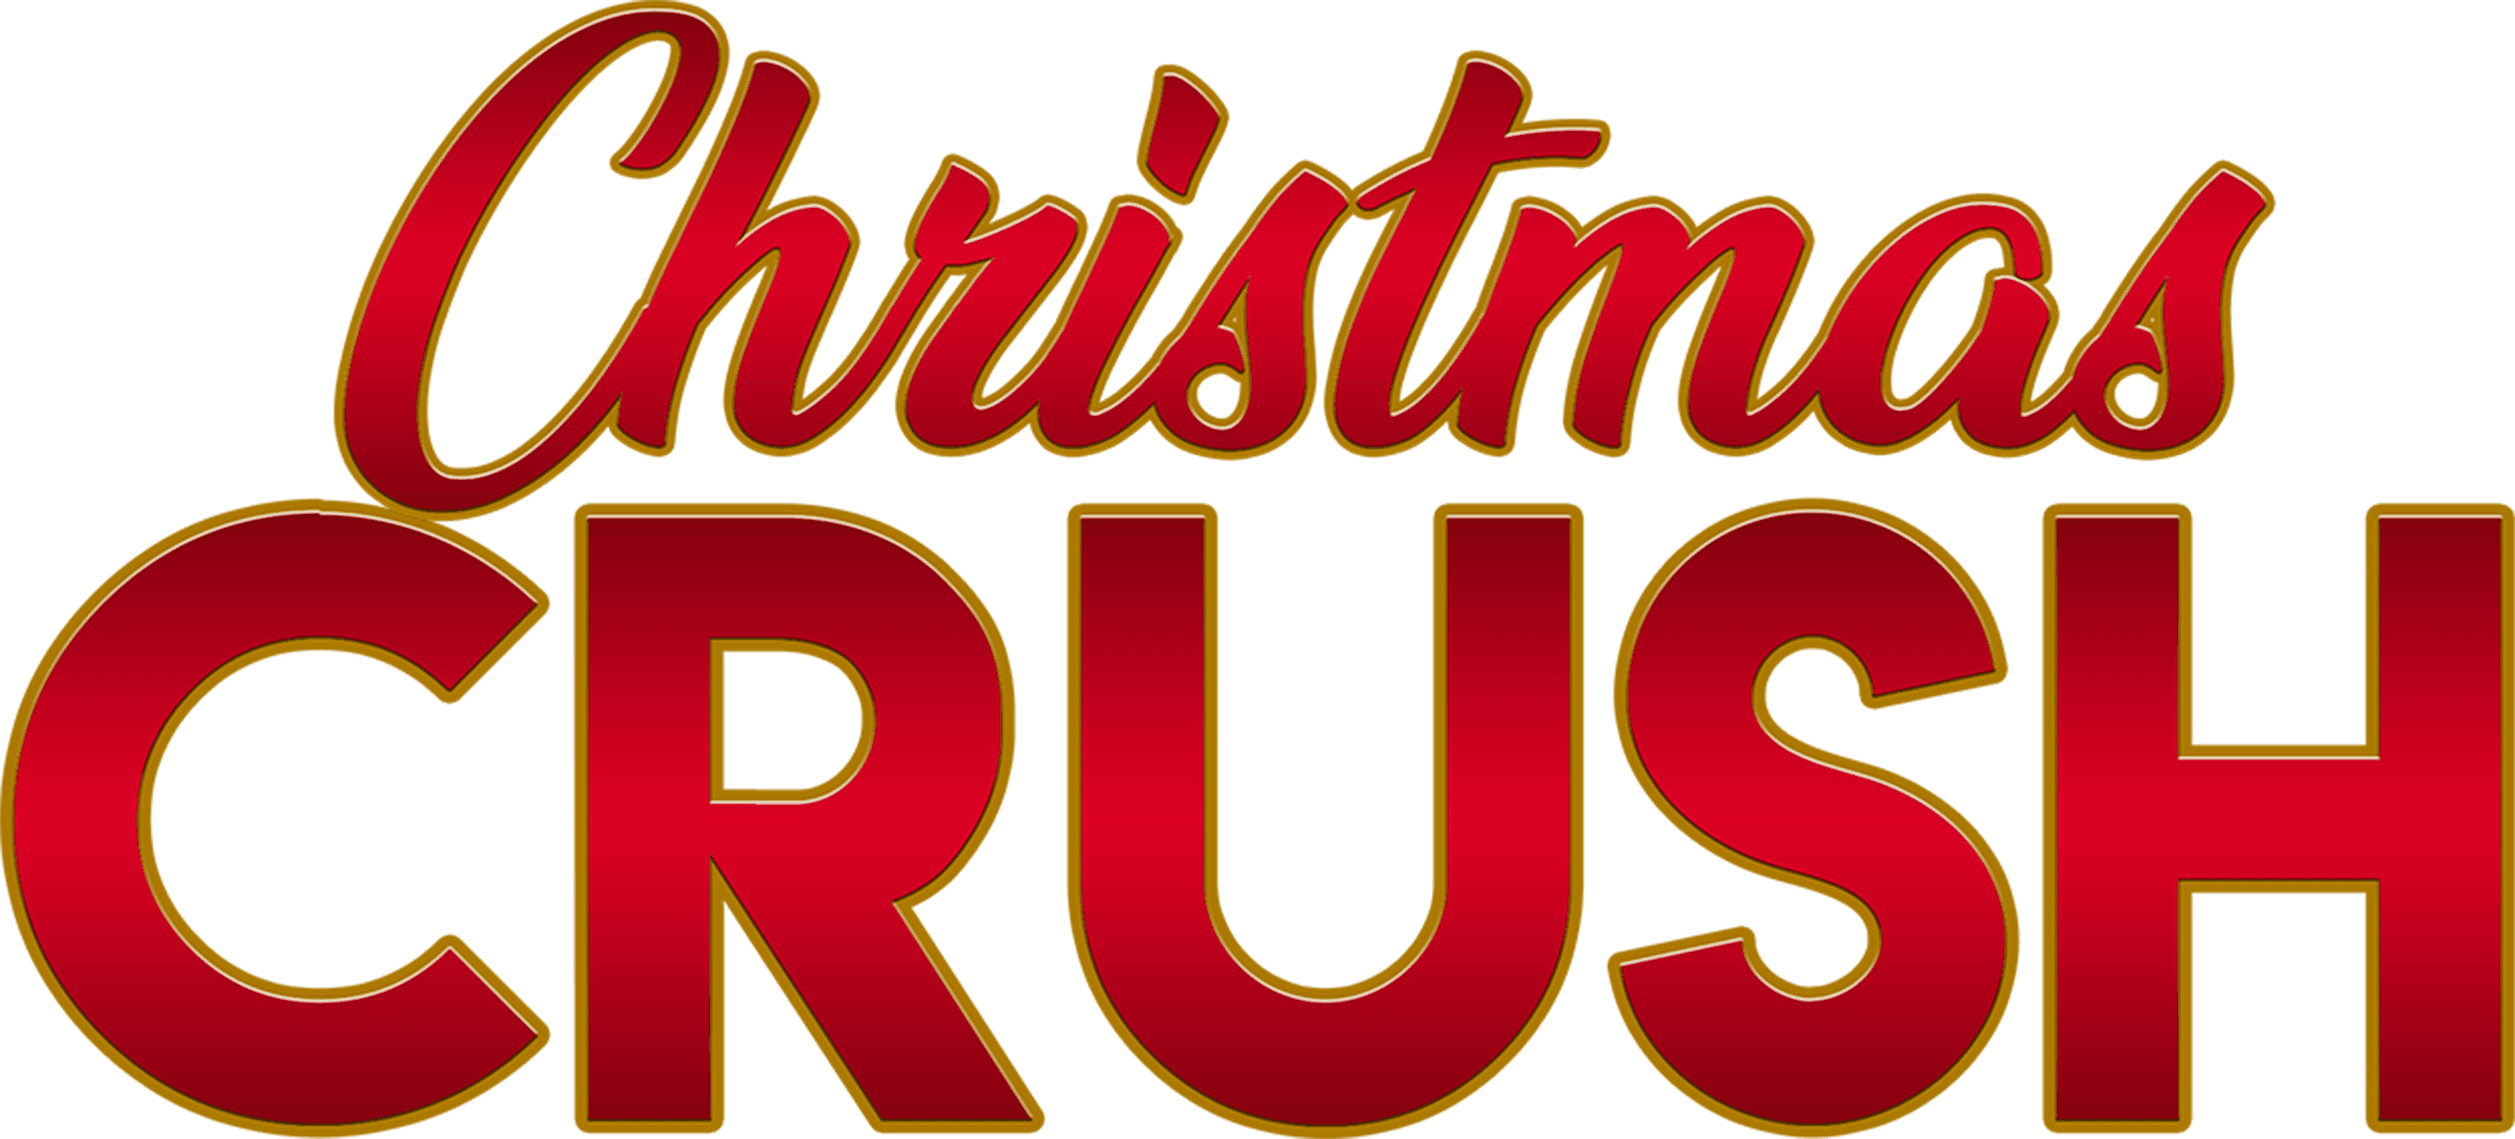 Christmas Crush logo